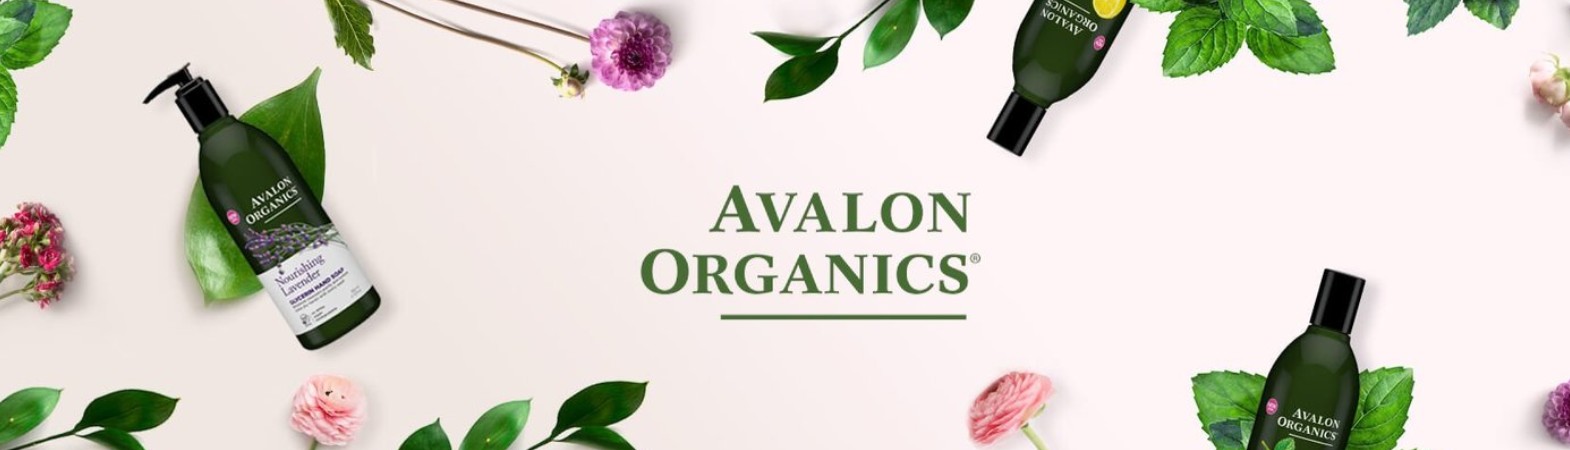 Avalon Organics - ΑΝΔΡΑΣ